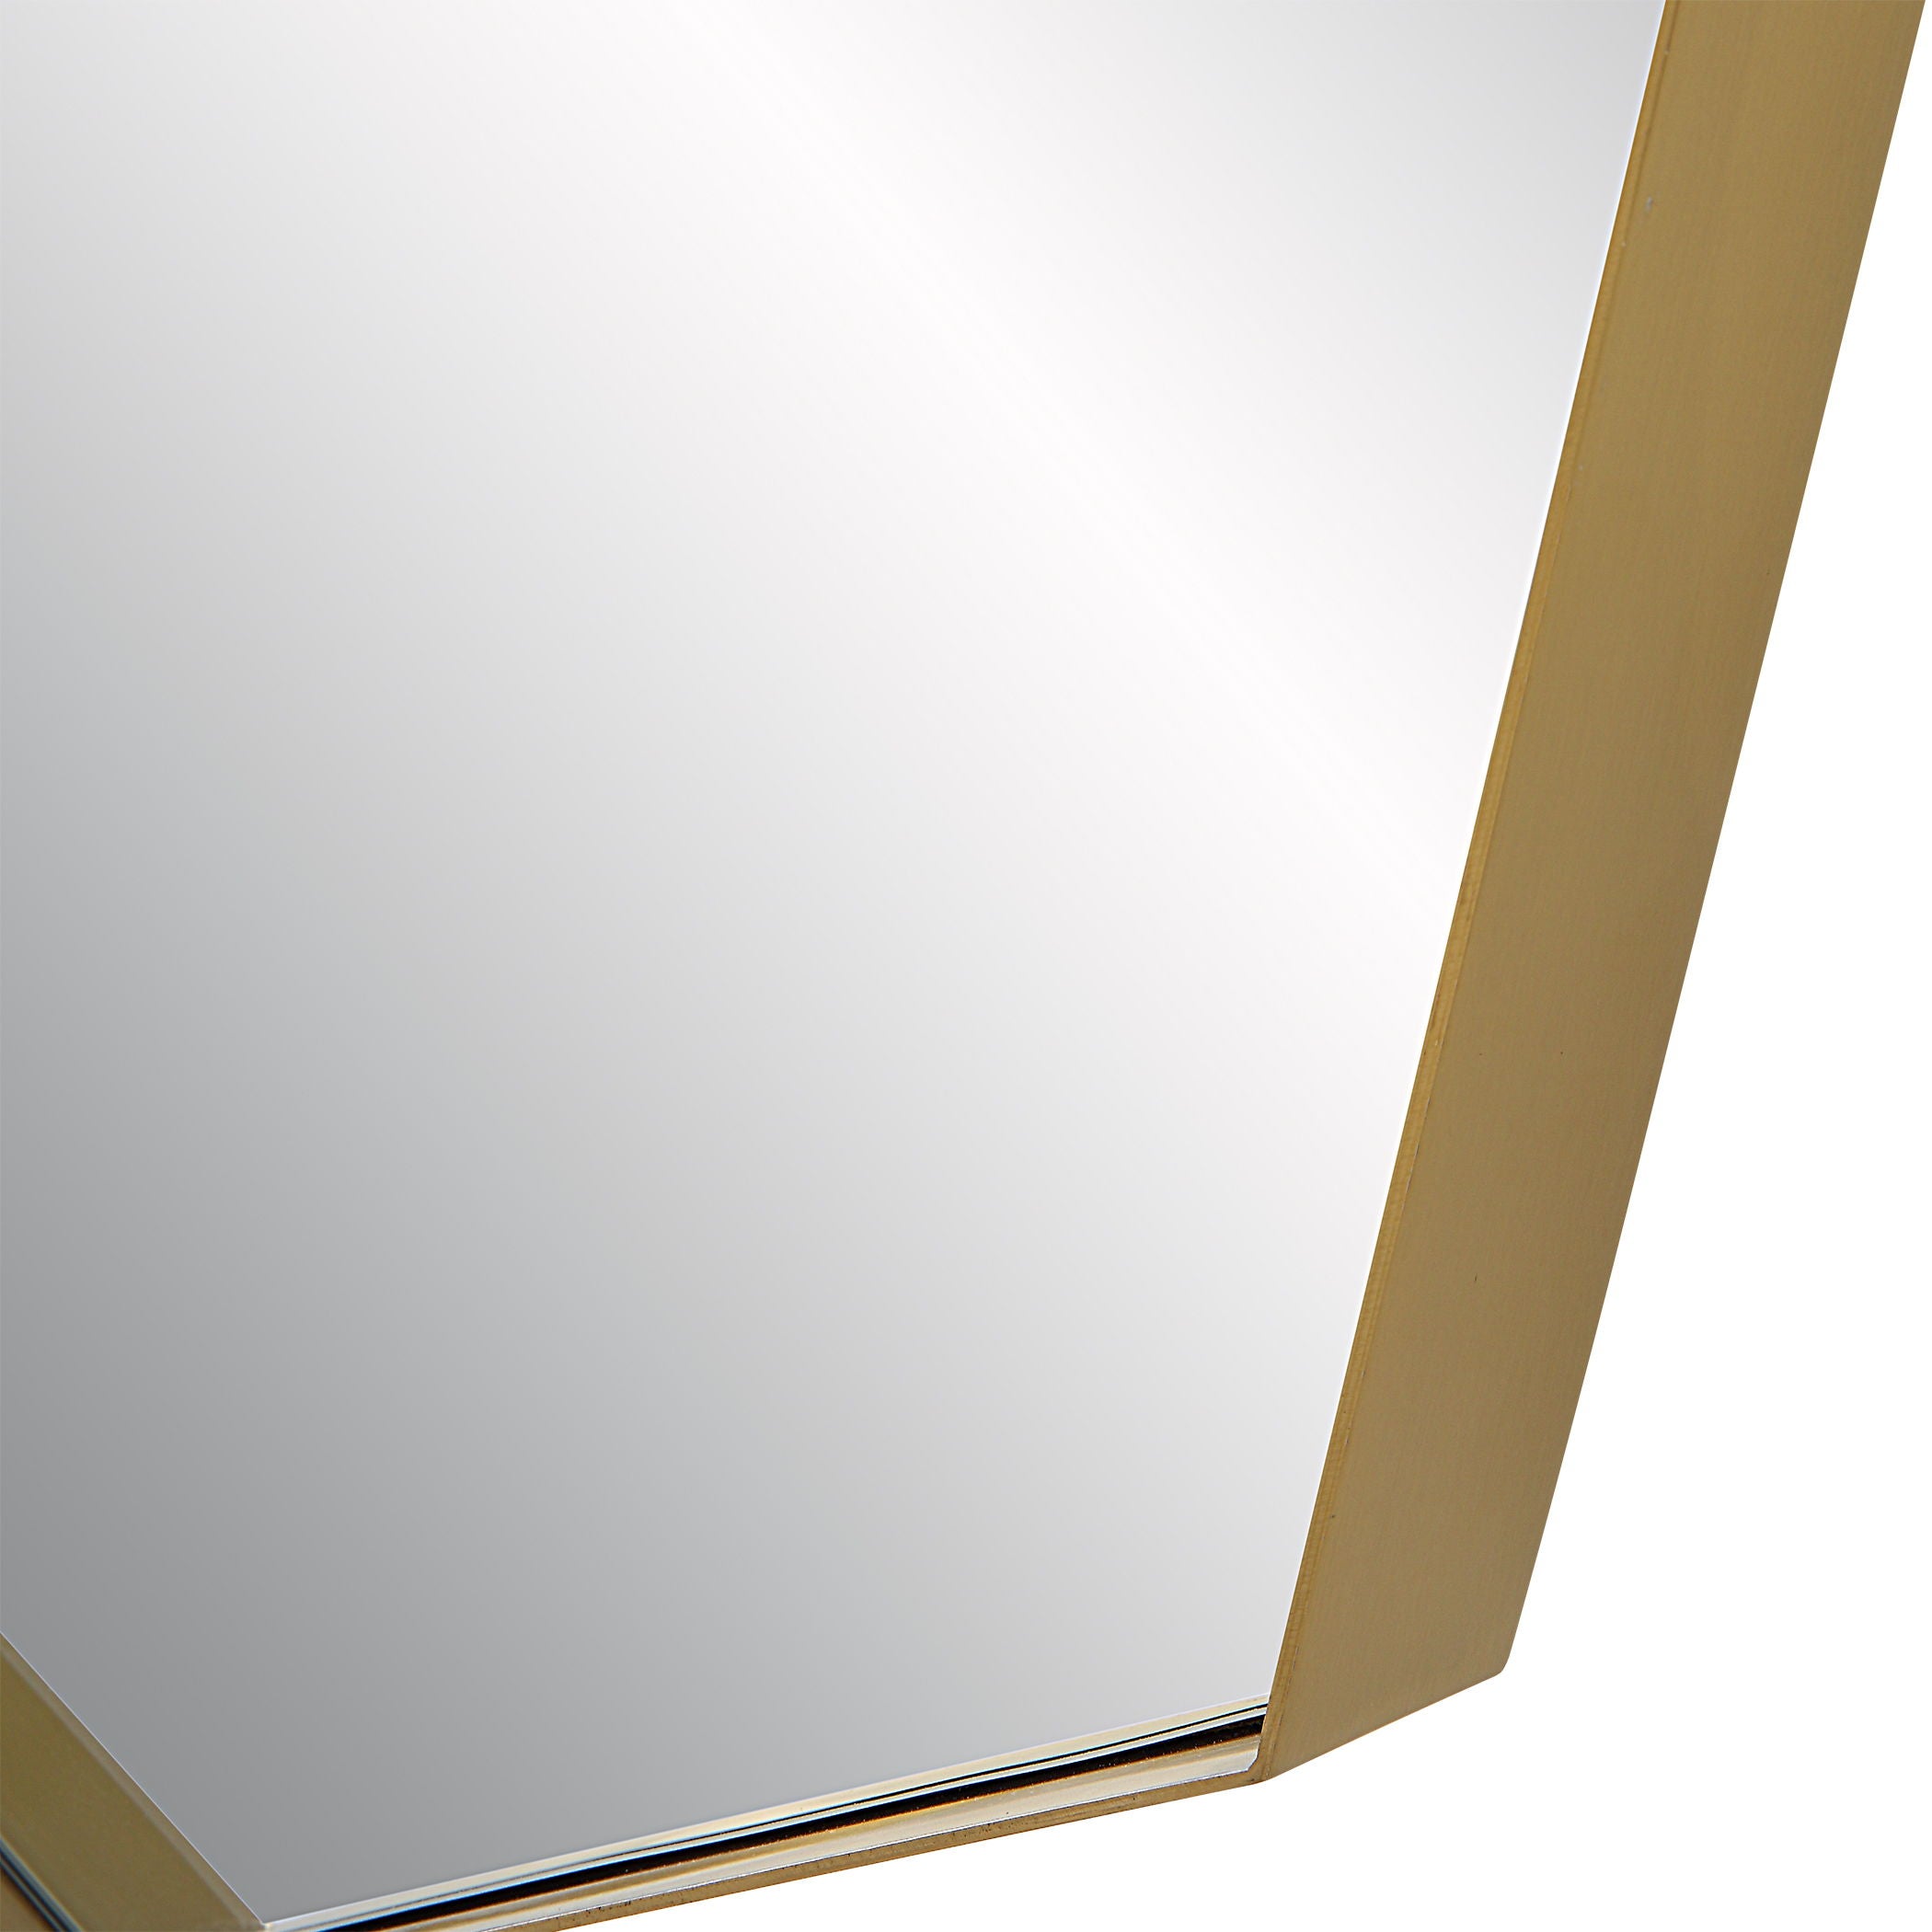 Vault - Oversized Angular Mirror - Gold